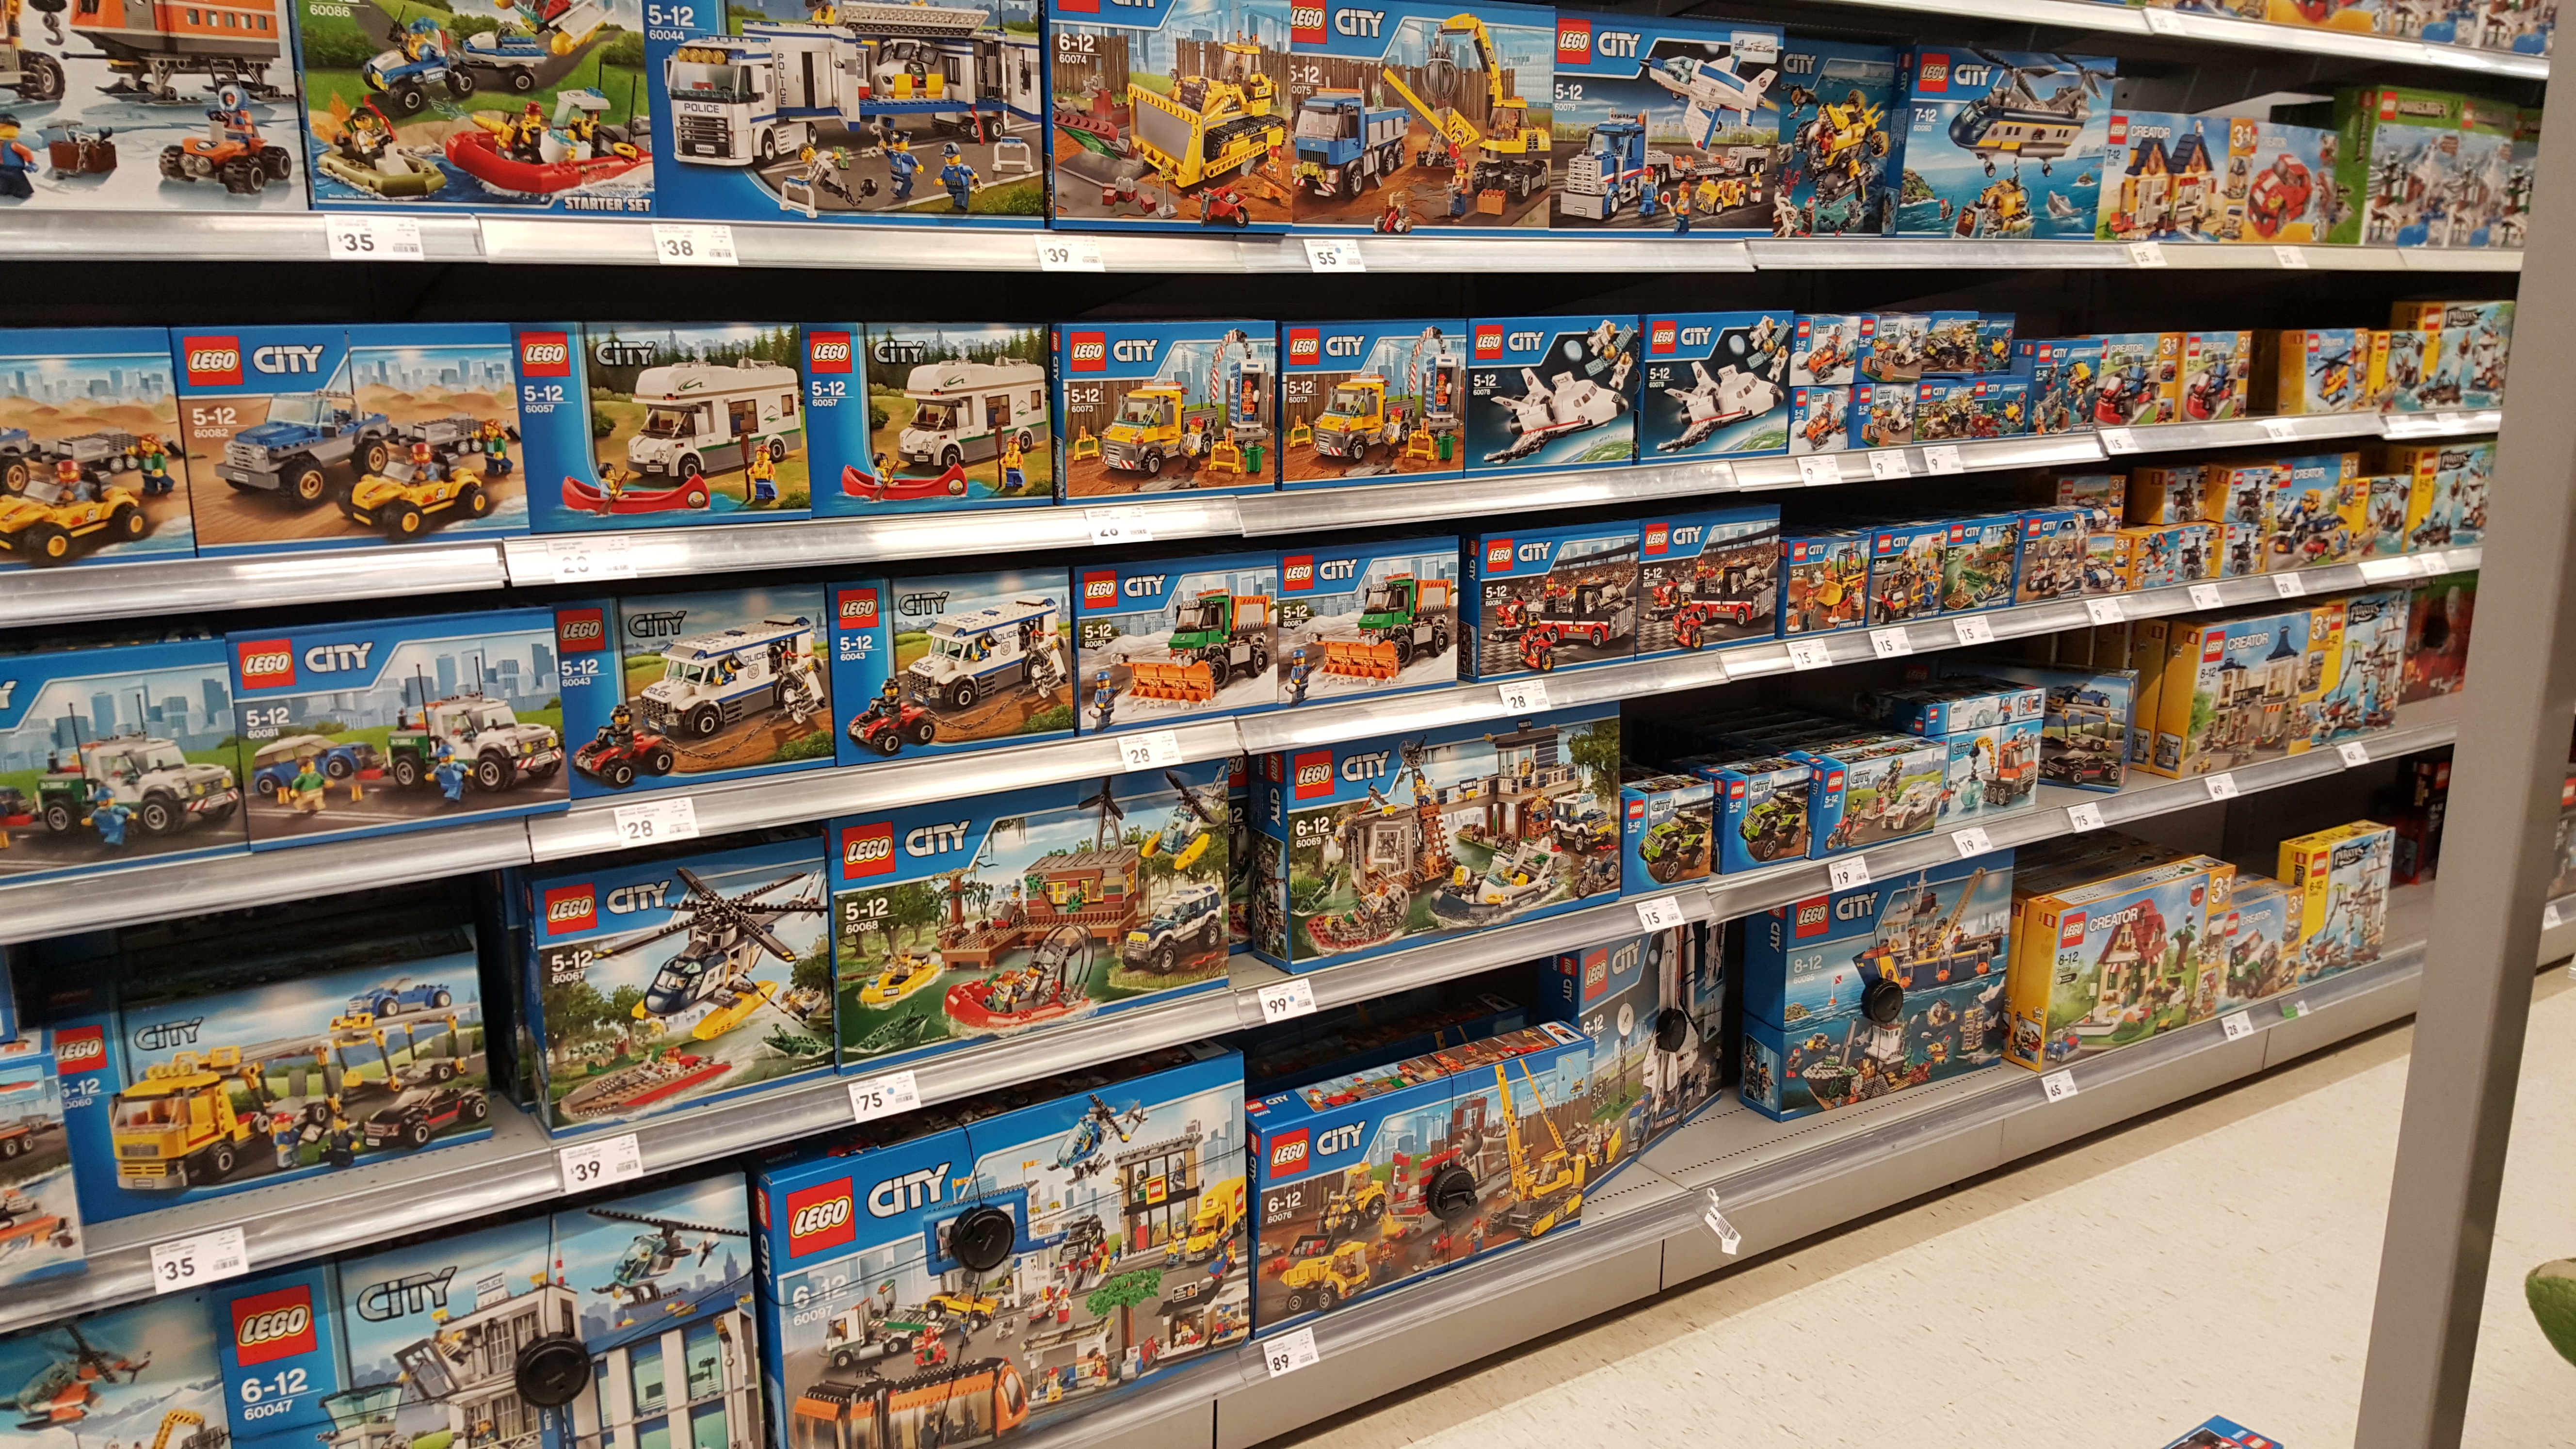 New Lego City Ninjago Star Wars And Minecraft Sets Available At